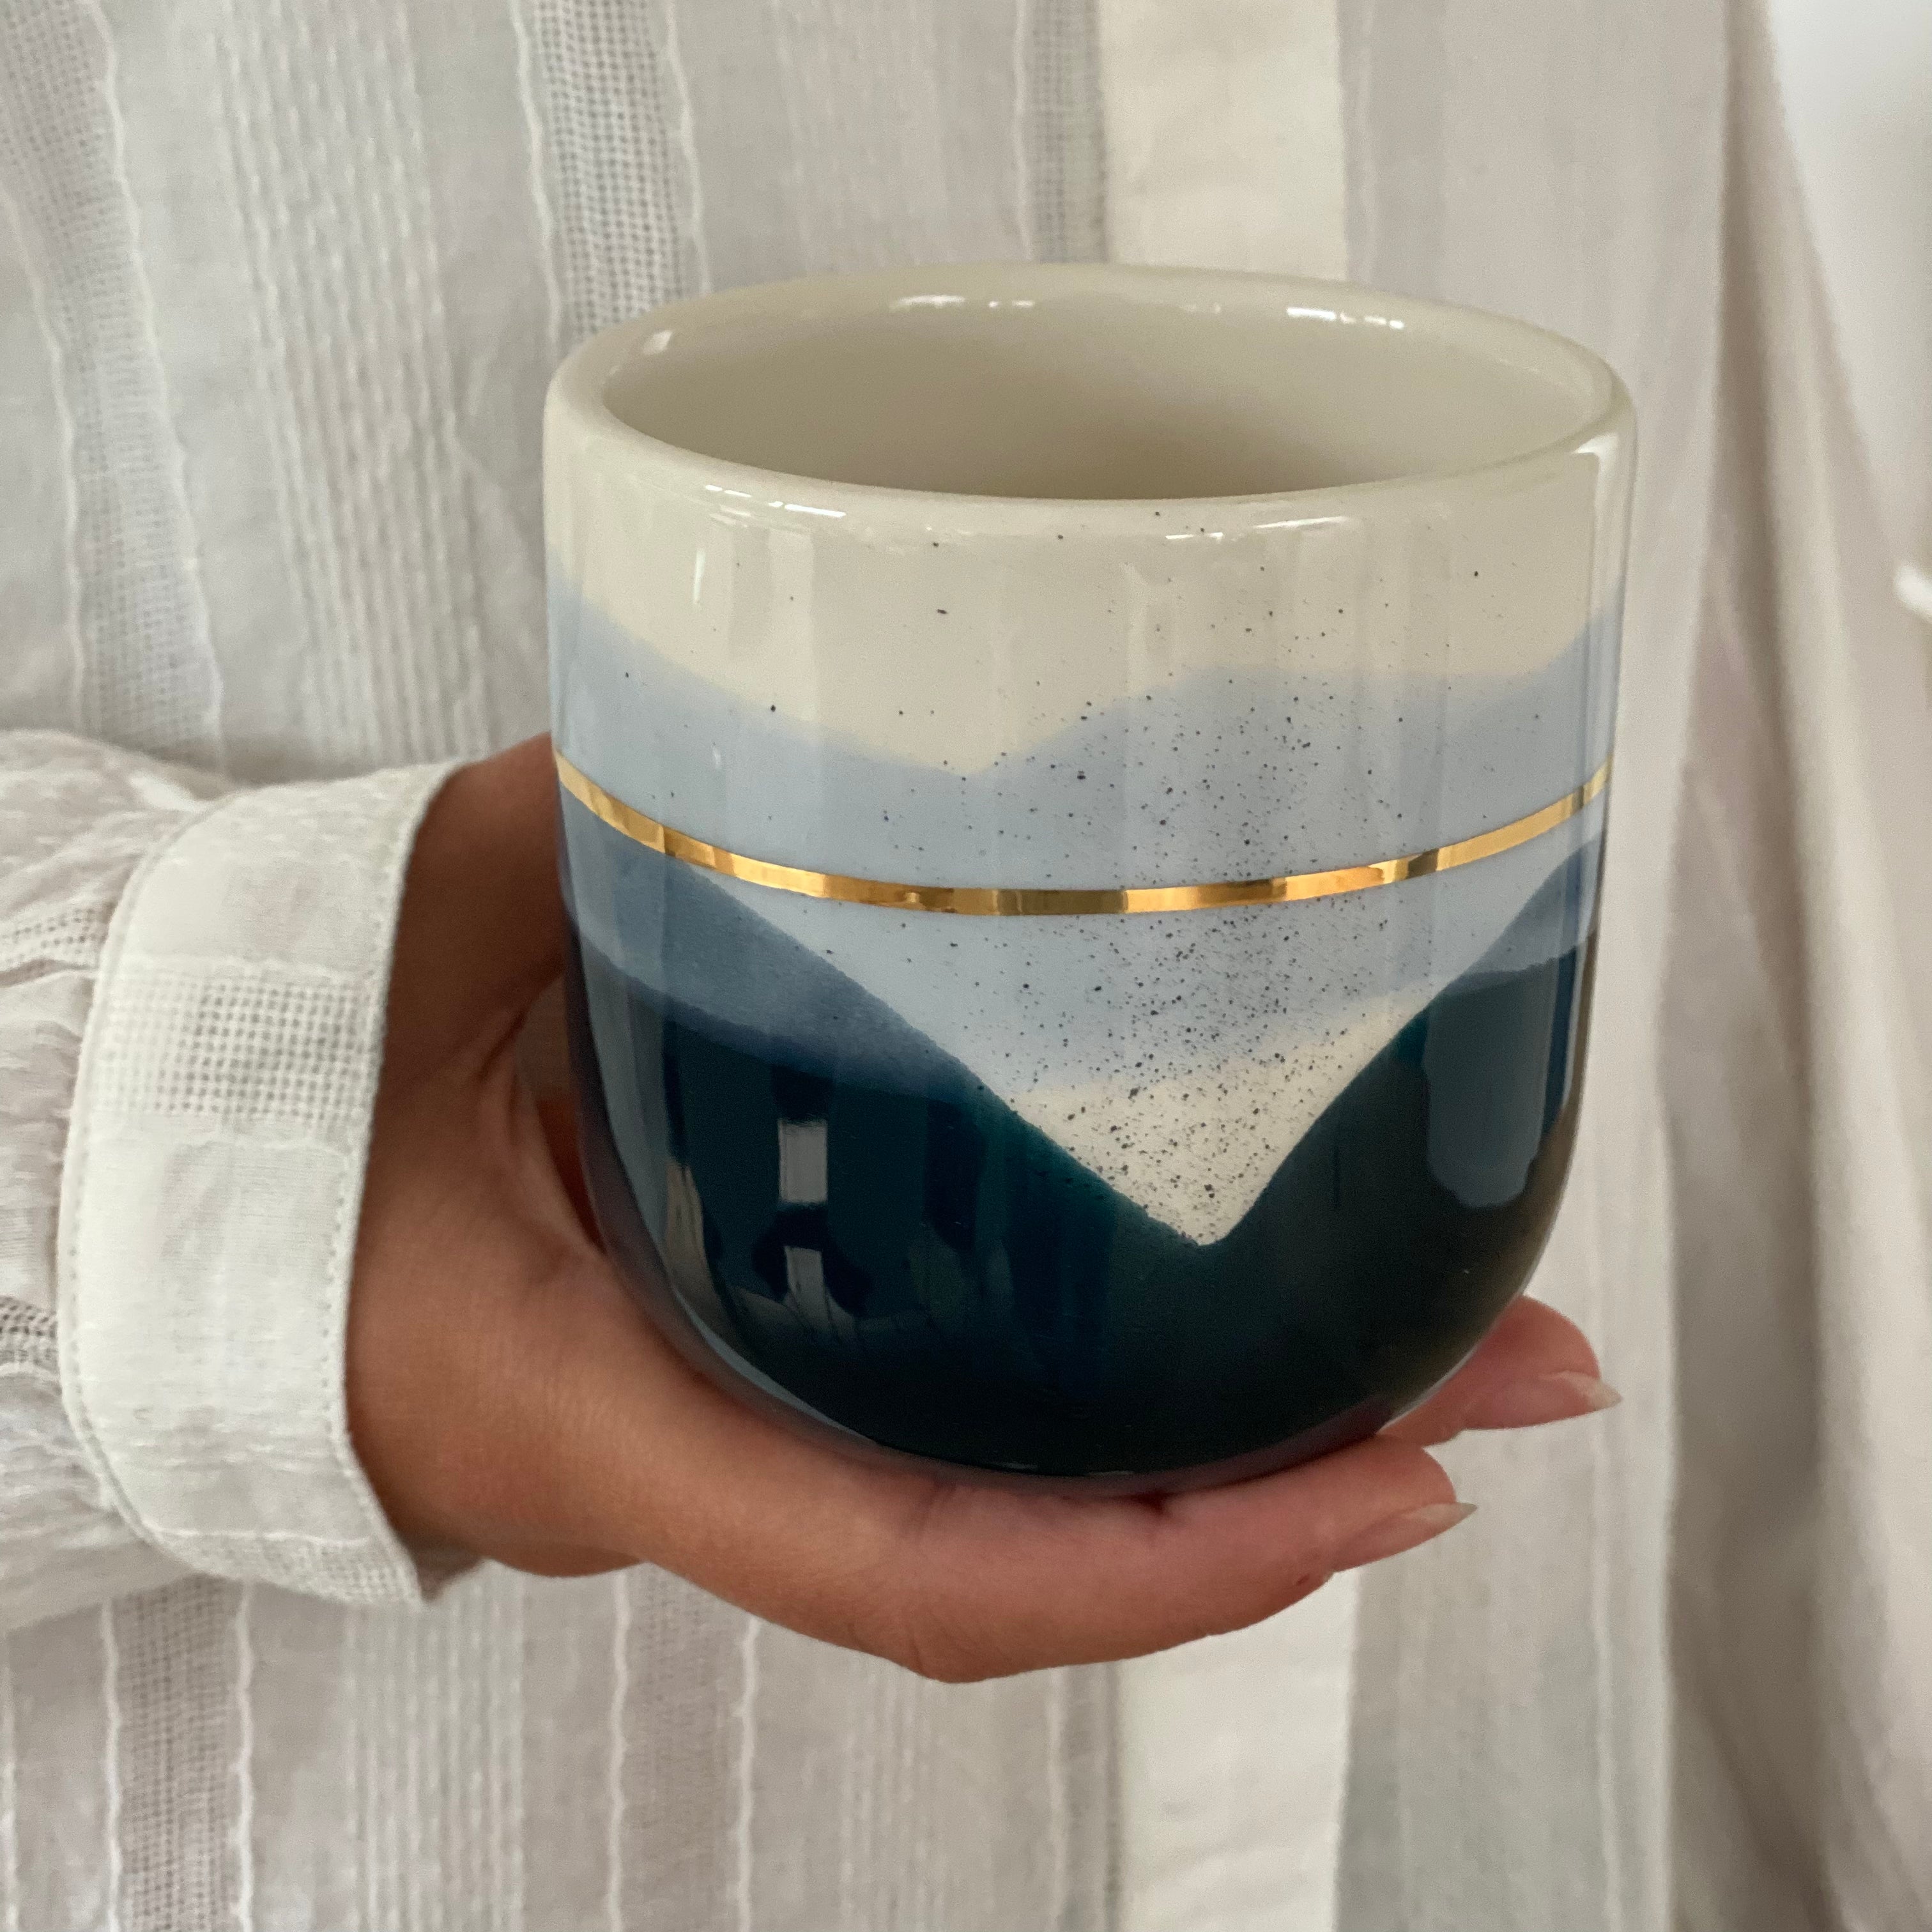 Marinski Heartmade's latte cup Landscape - dark blue, light celestial blue